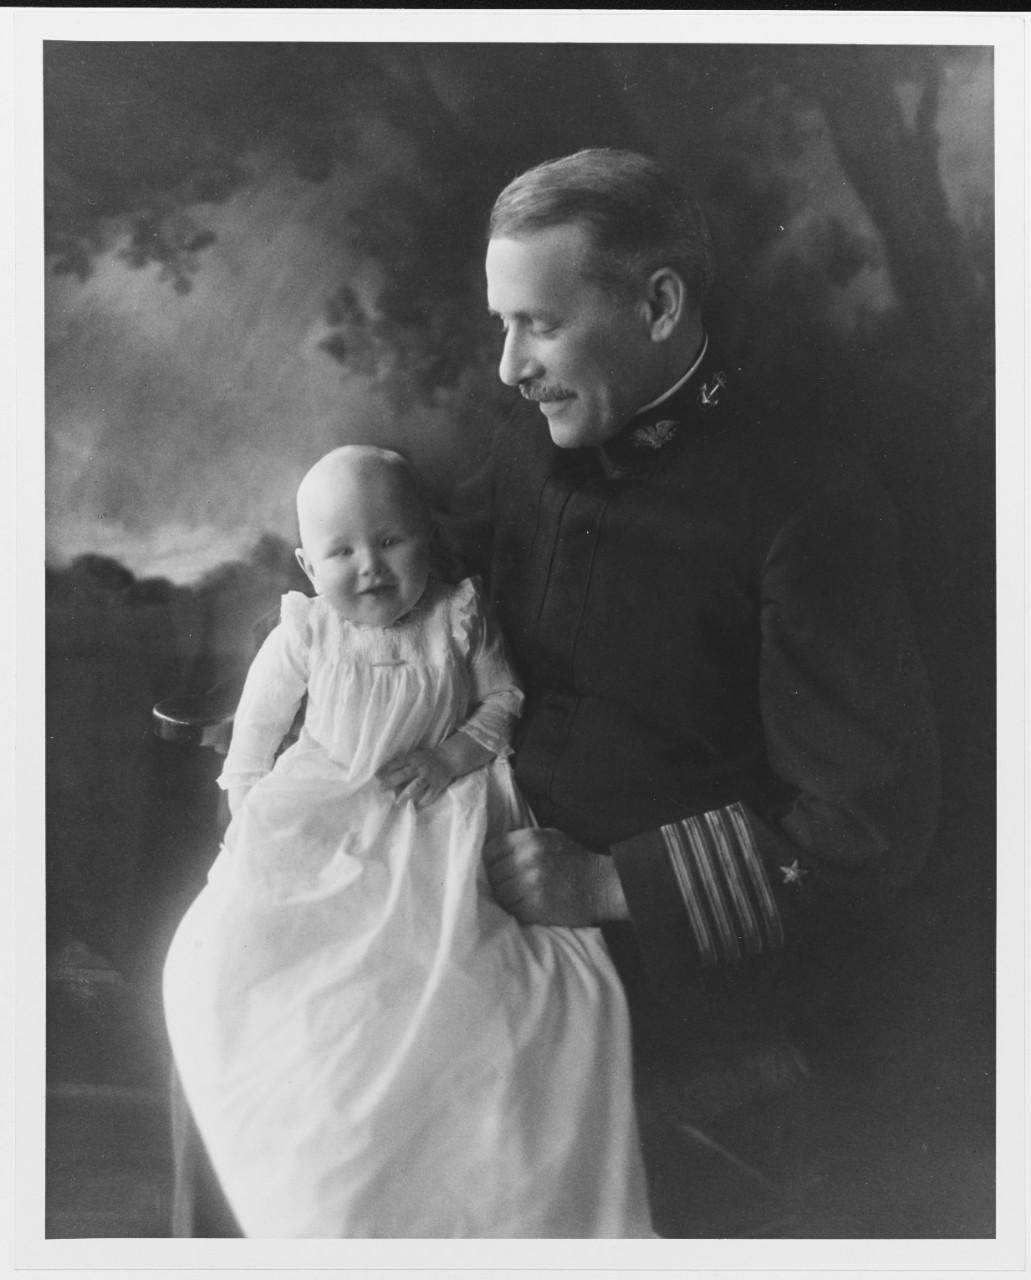 Captain William V. Pratt, USN.